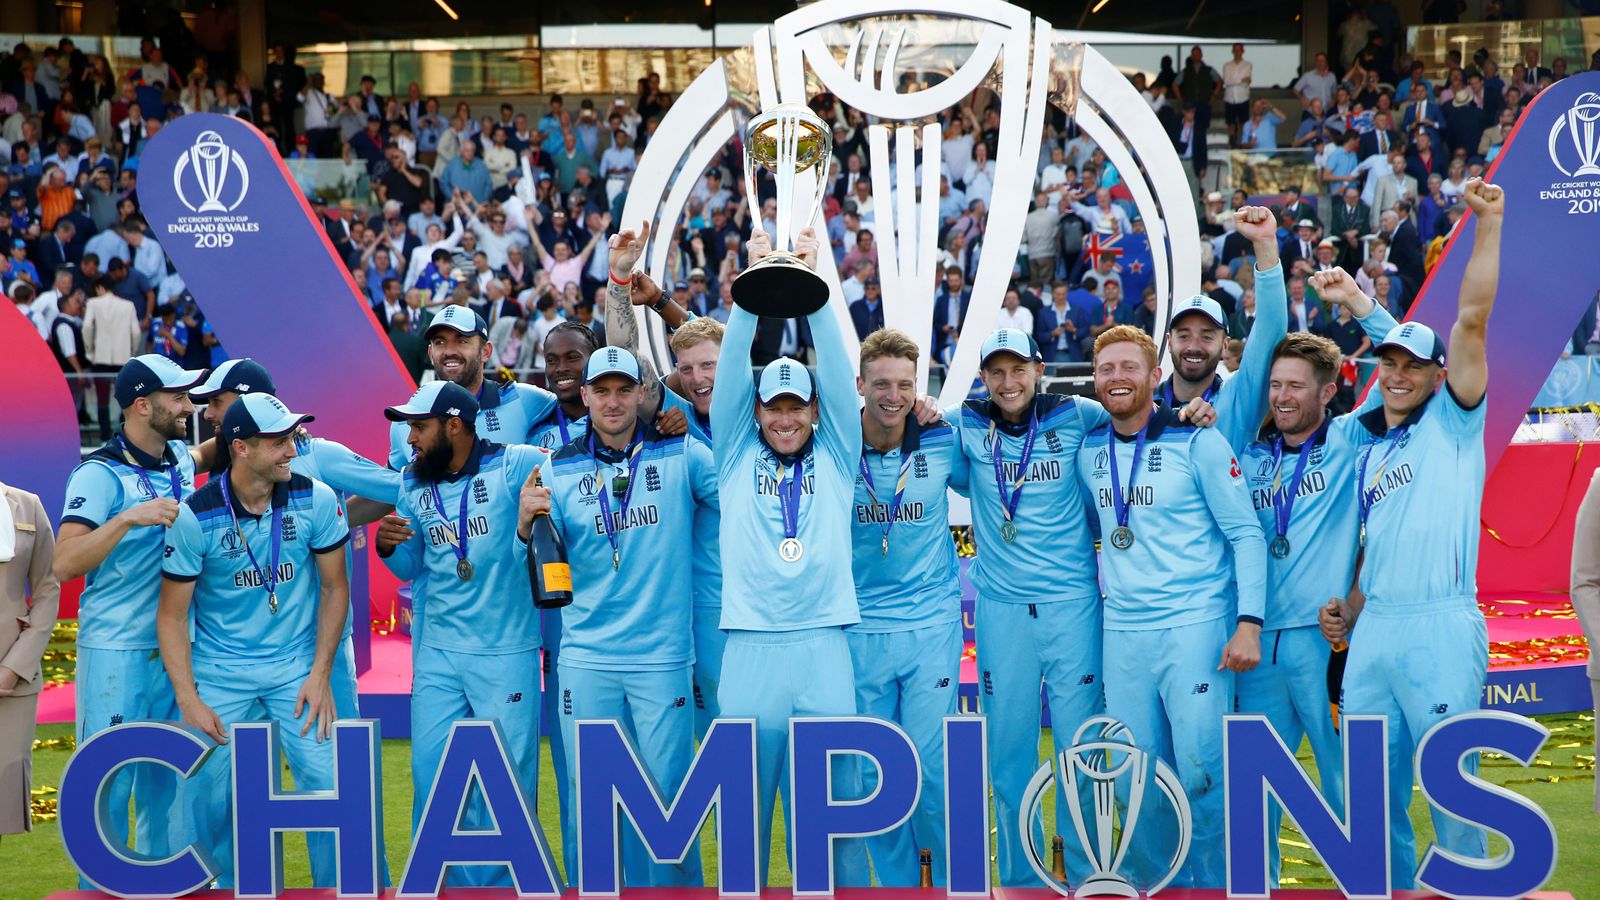 icc cricket world cup winners